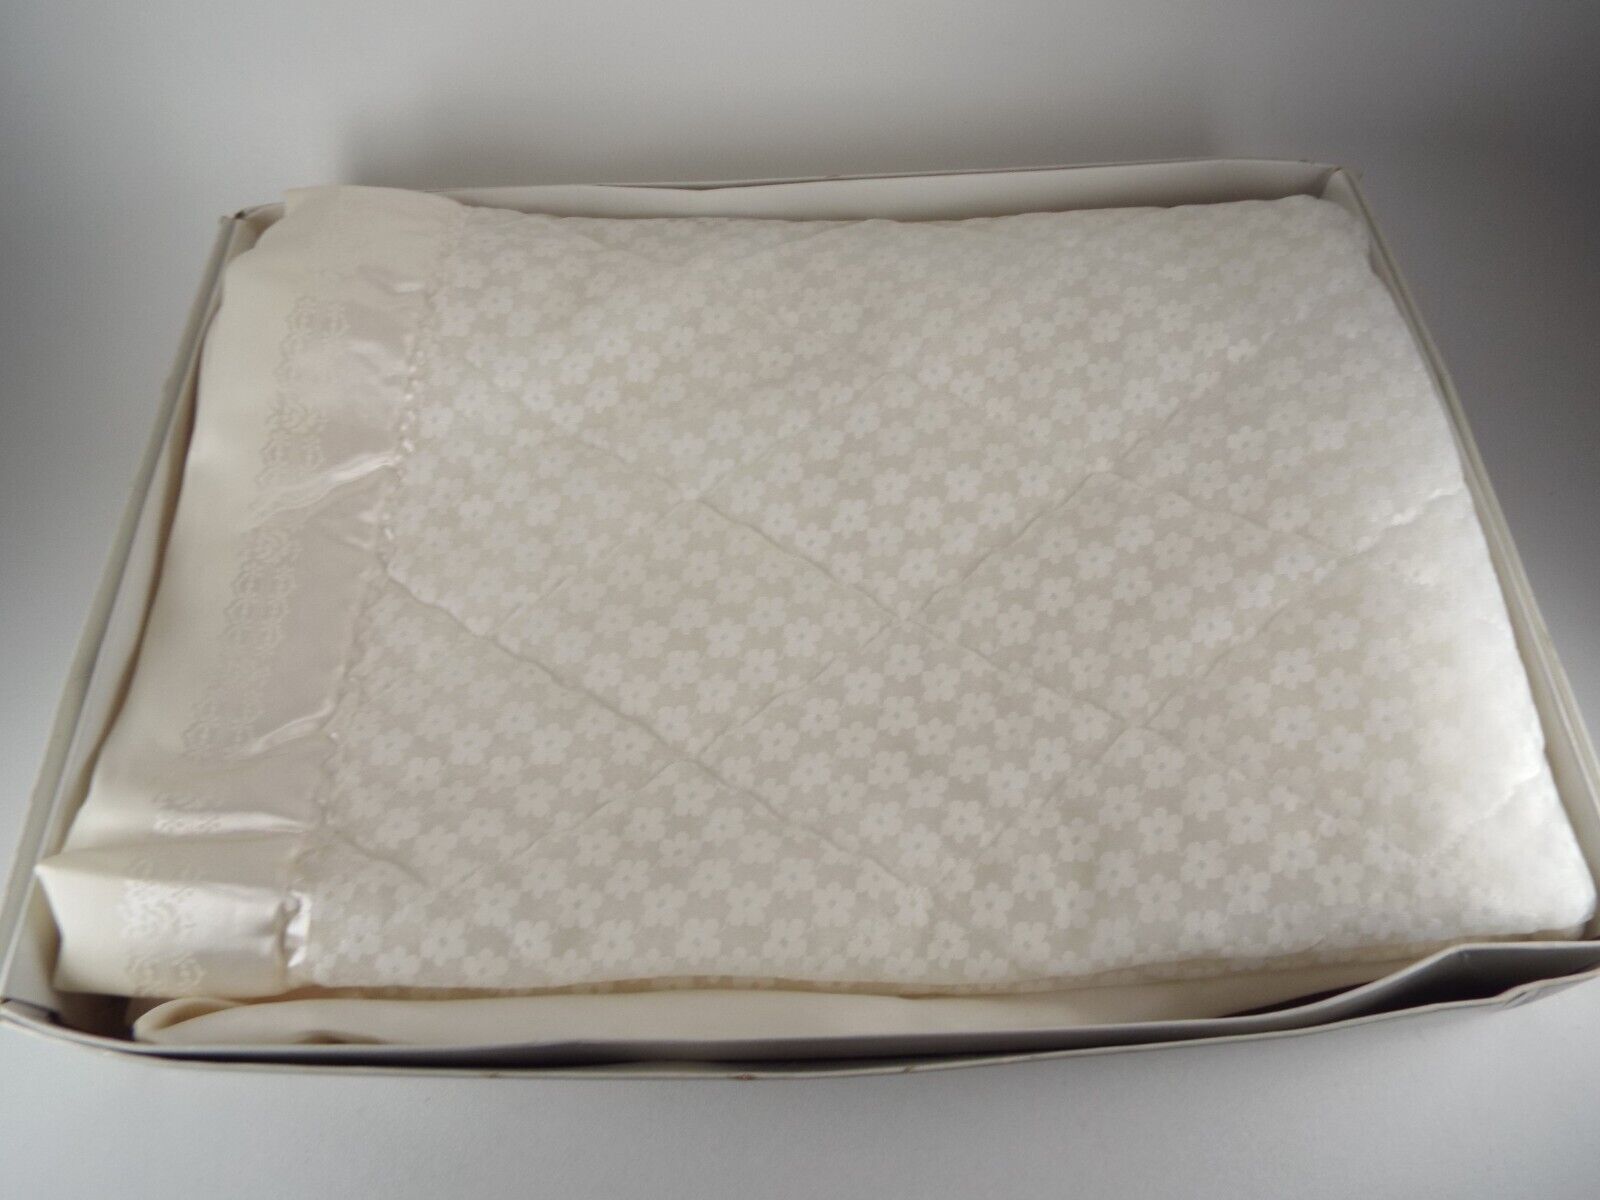 Vintage Baby Blanket White Lace and Satin Trim Storktex w Box Style 245 Baptism